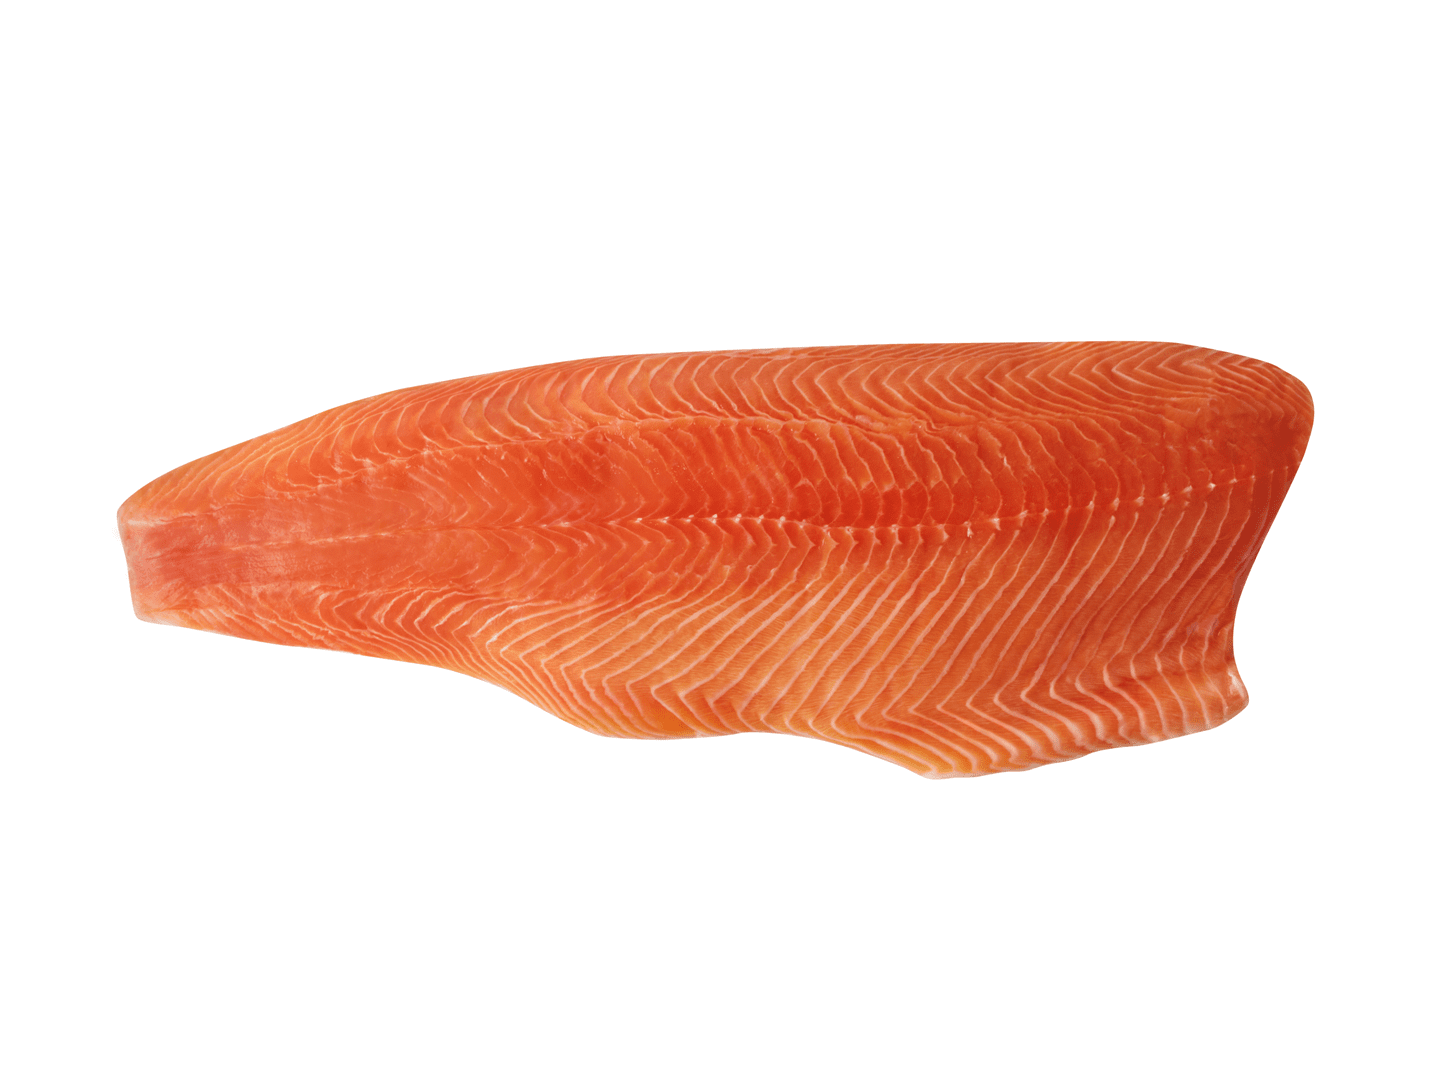 Salmon-flesh